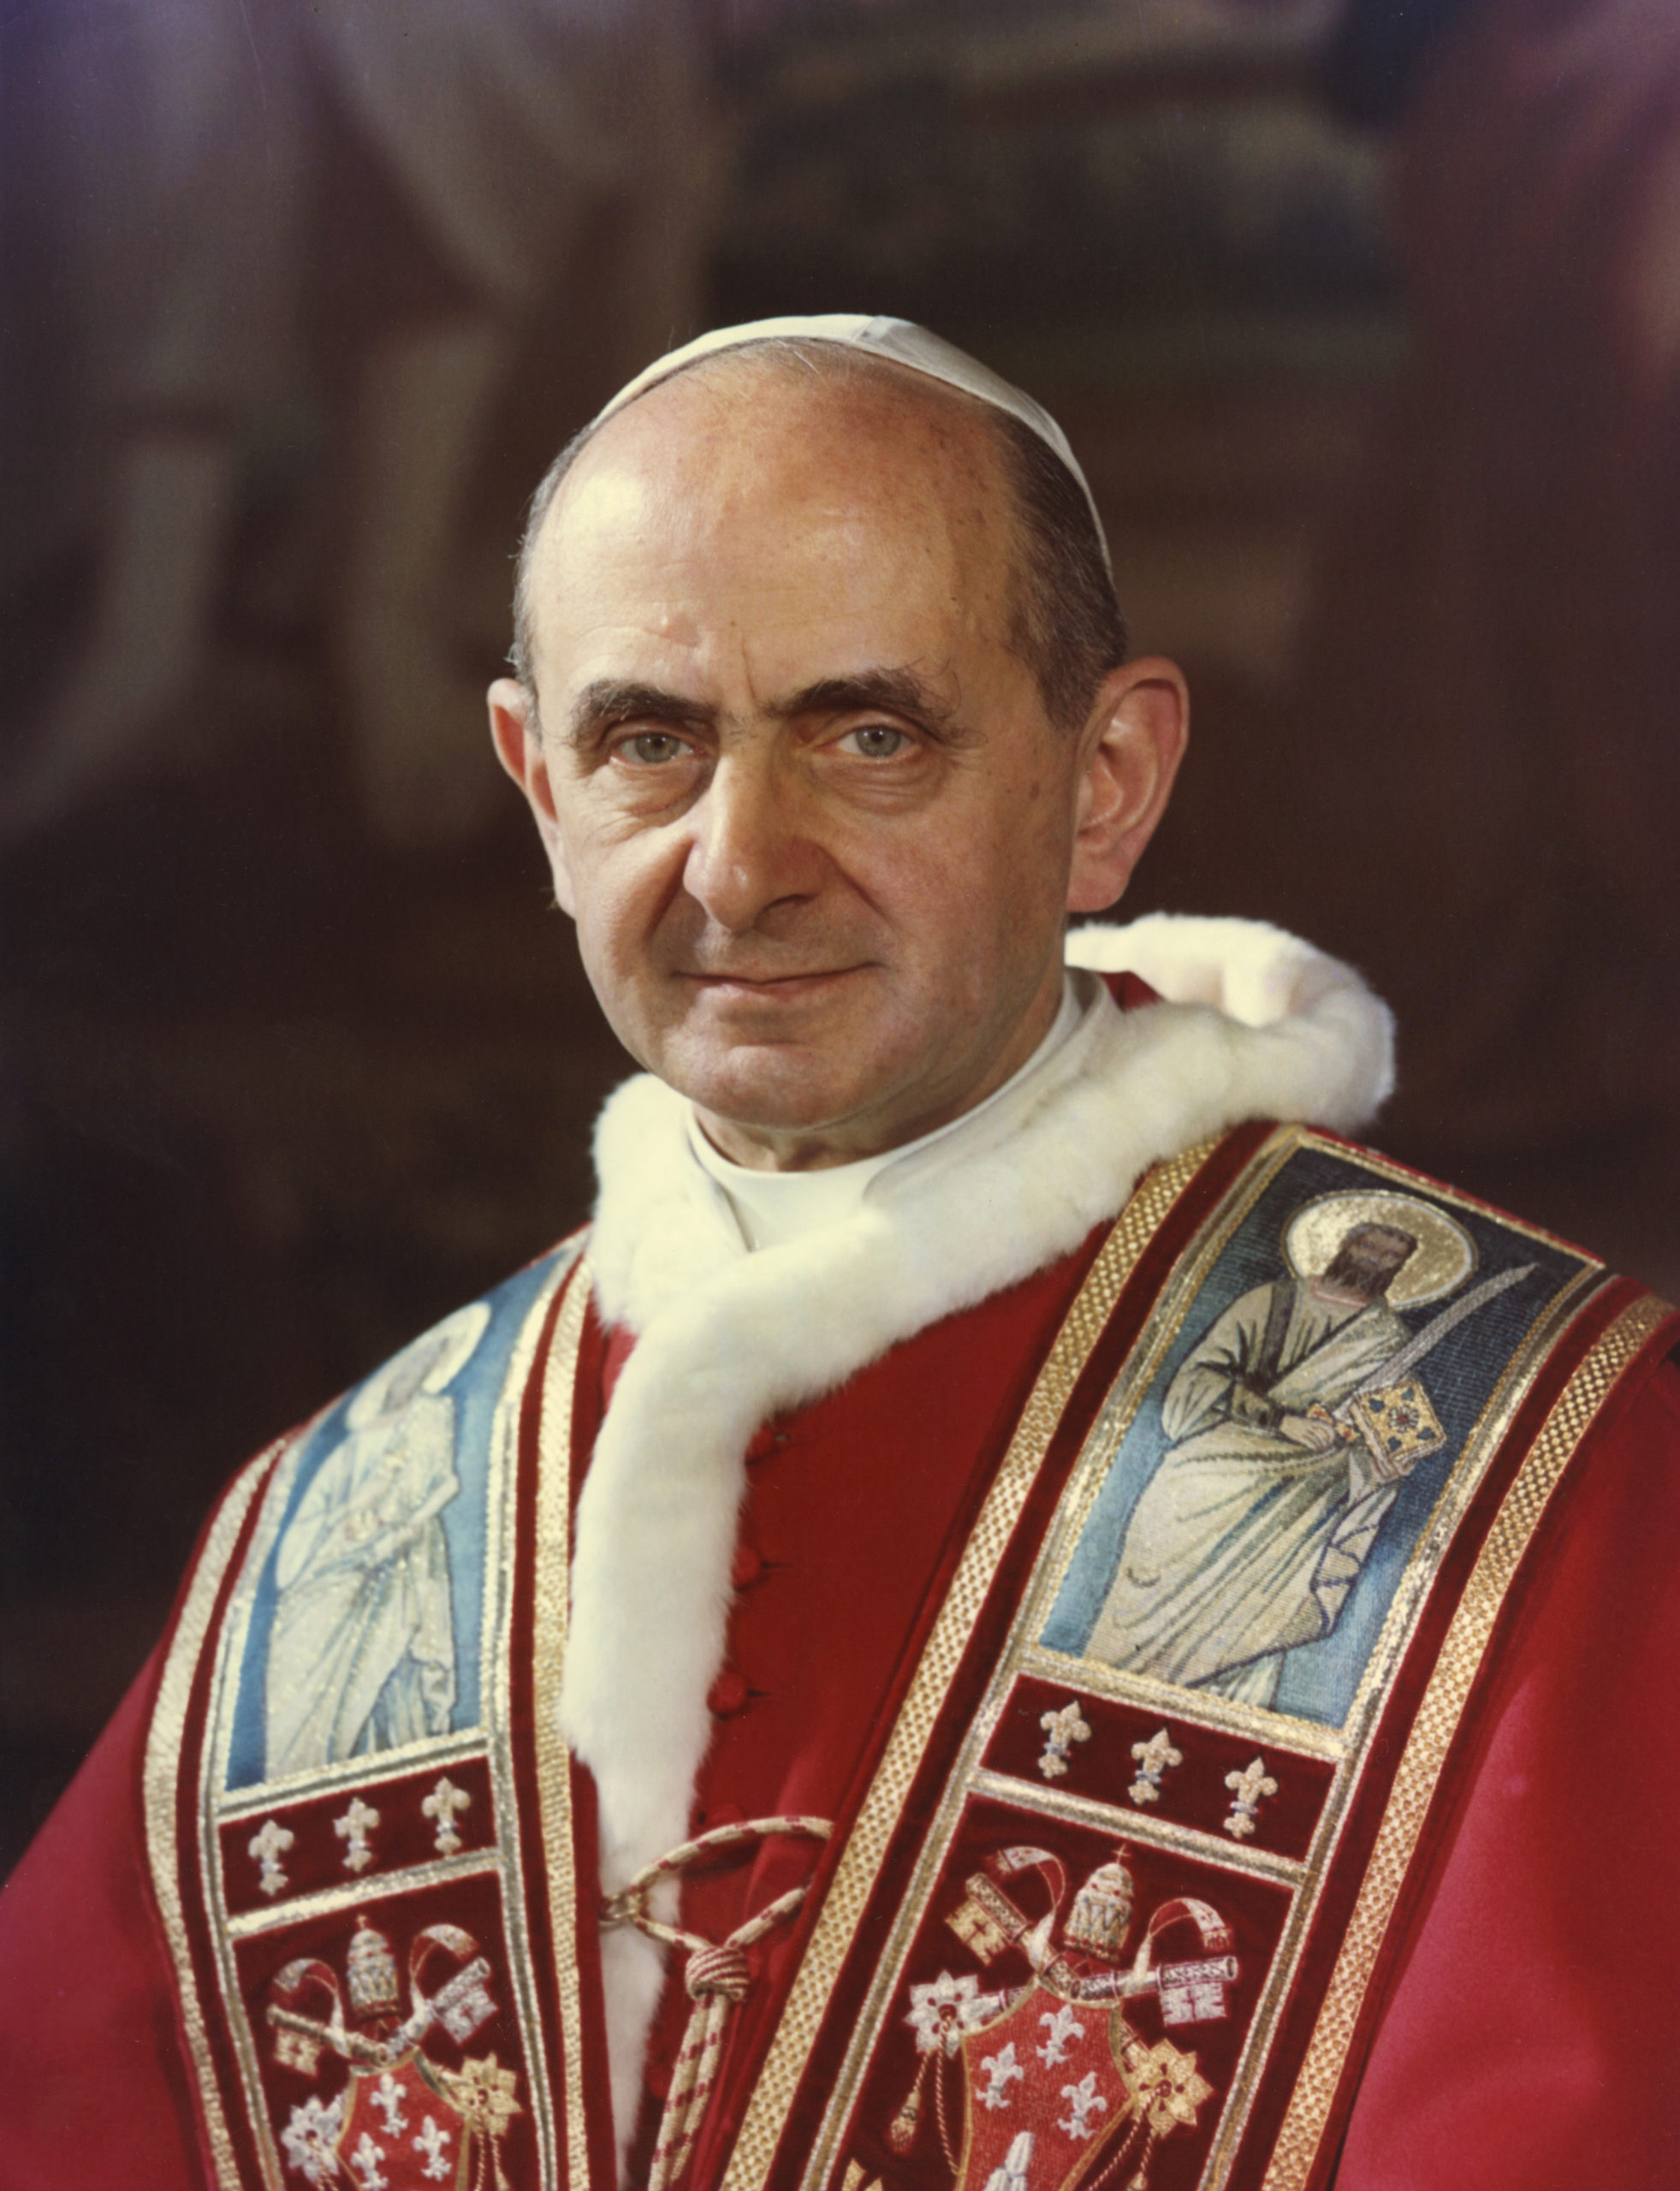 Pope Paul VI, 1897-1978